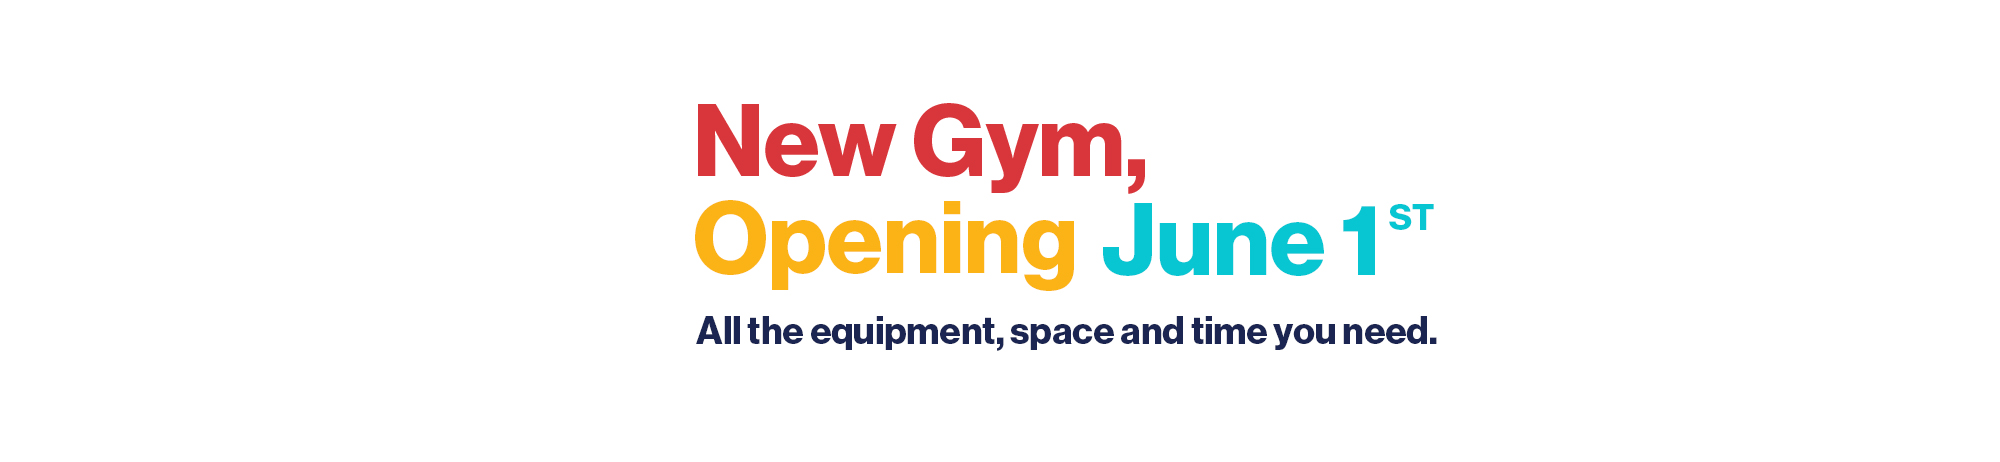 New-Gym-openign-Jun-1-web-banner.jpg